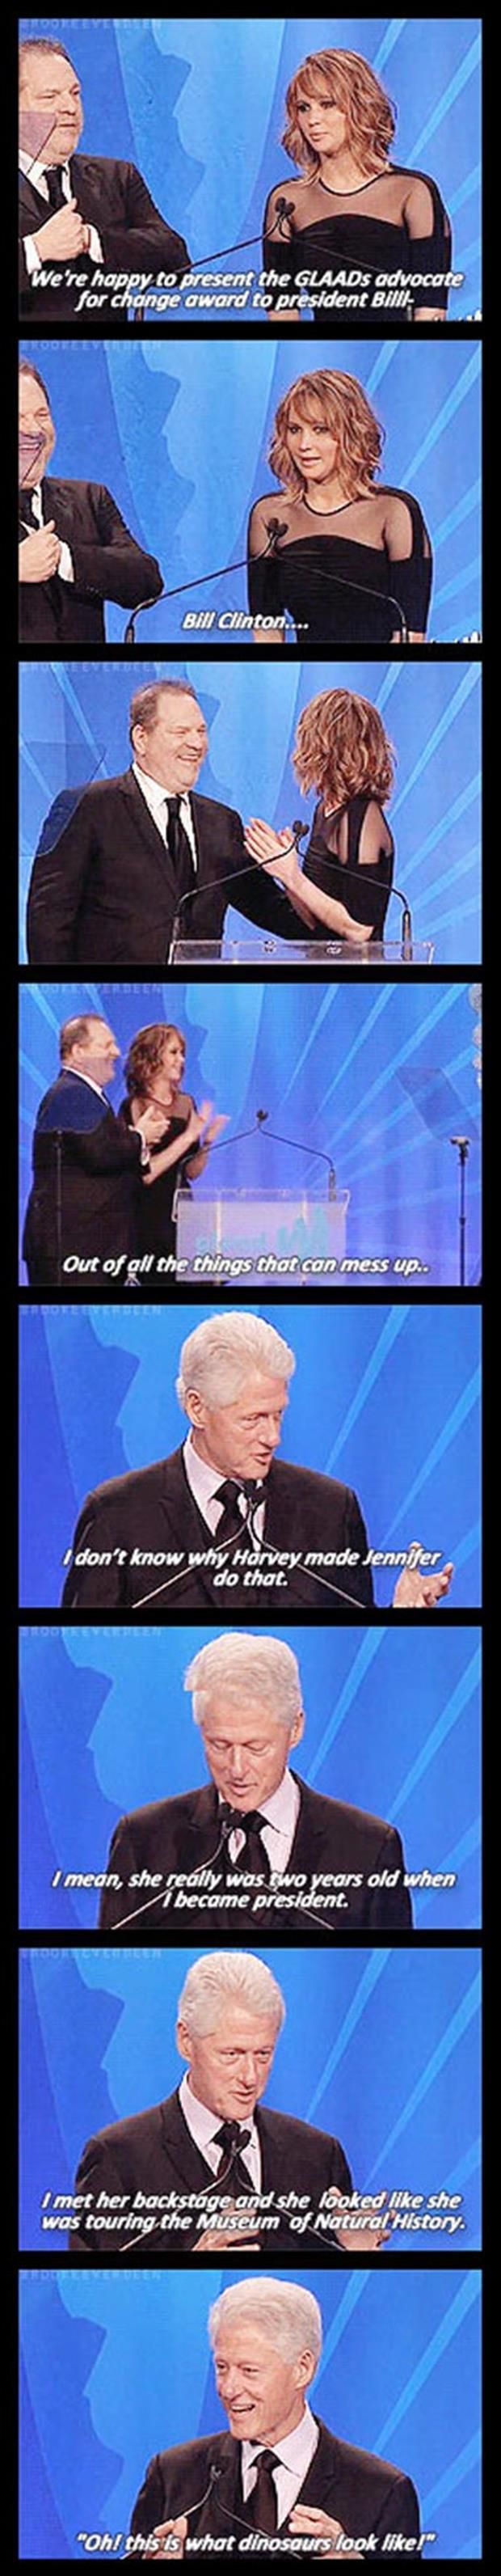 Bill Clinton & Jennifer Lawrence